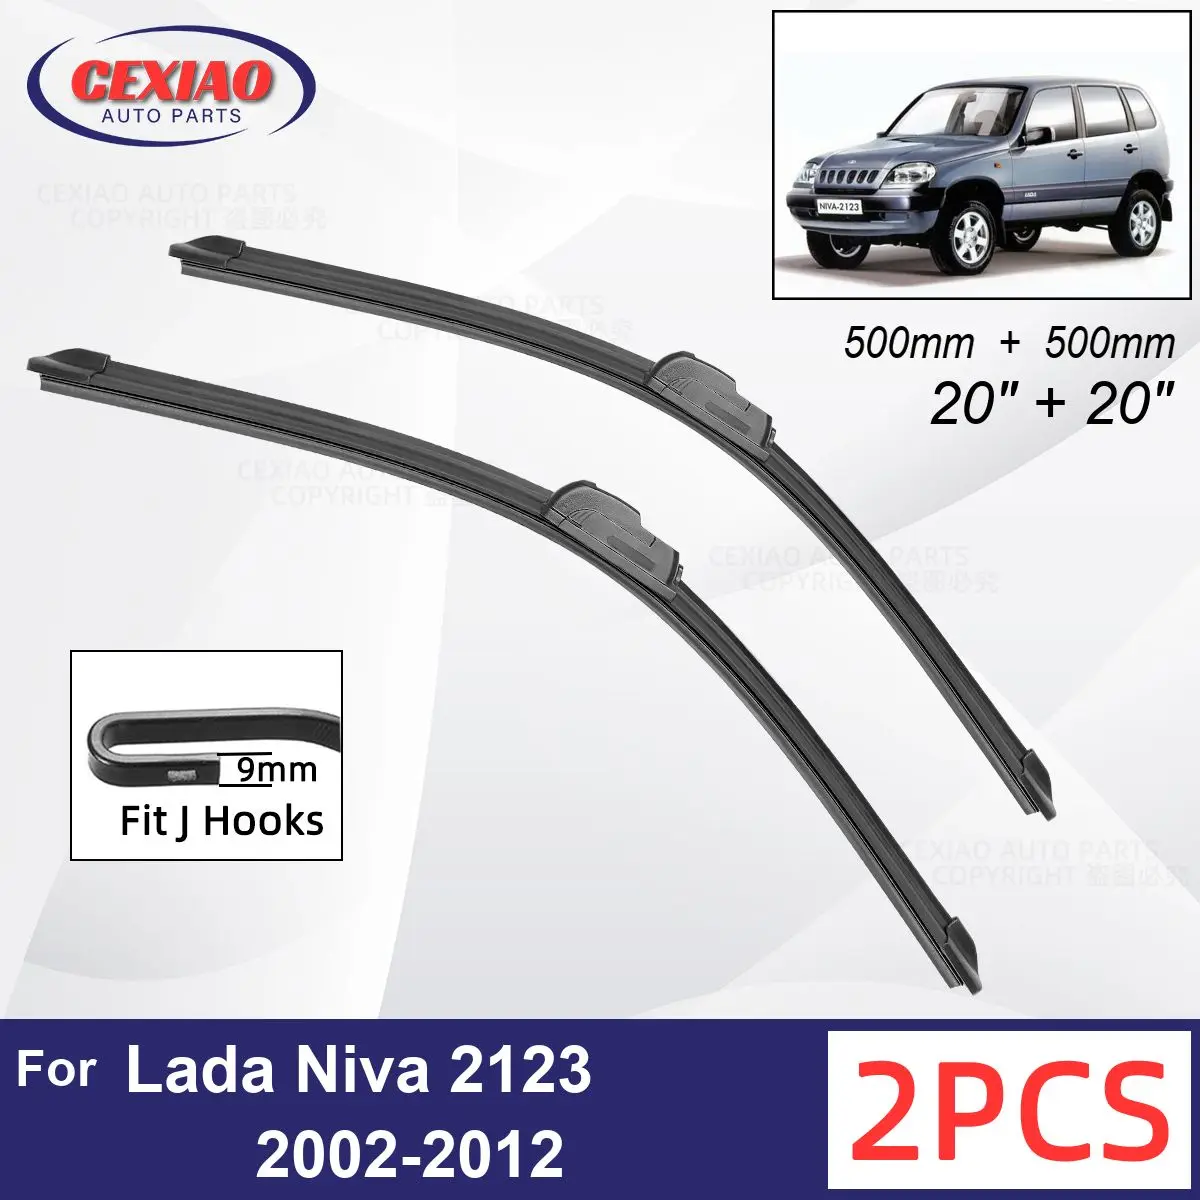 

Car Wiper For Lada Niva 2123 2002-2012 Front Wiper Blades Soft Rubber Windscreen Wipers Auto Windshield 20"+20" 500mm + 500mm